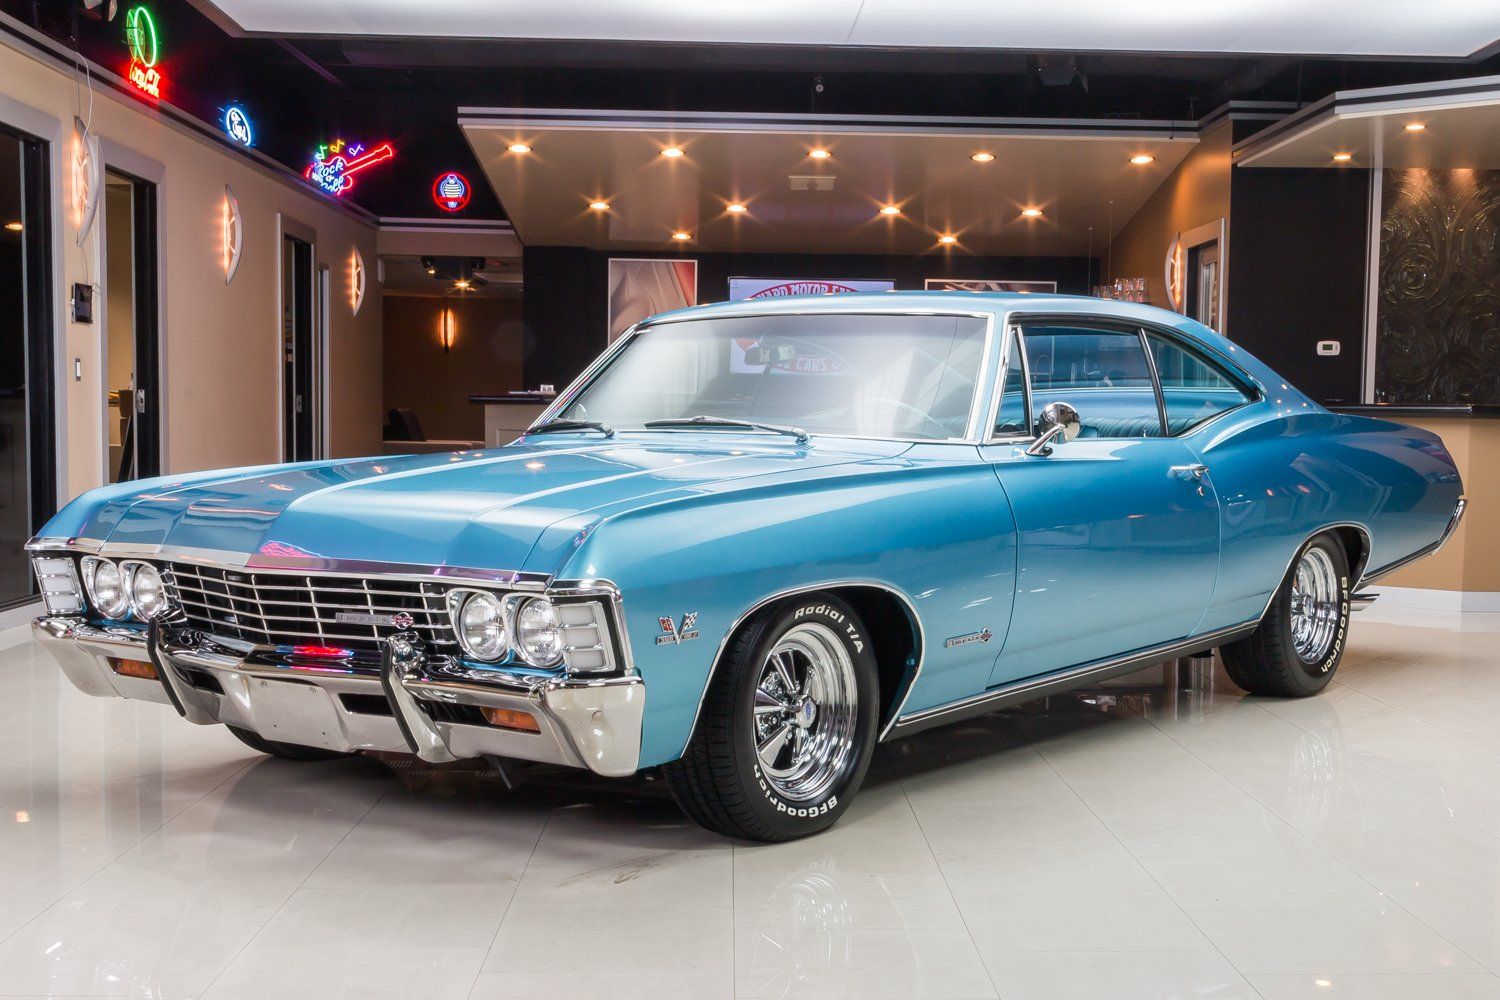 1967 Chevrolet Impala | Coches clásicos en venta Michigan: Muscle & Old Cars | Vanguard Motor Sales